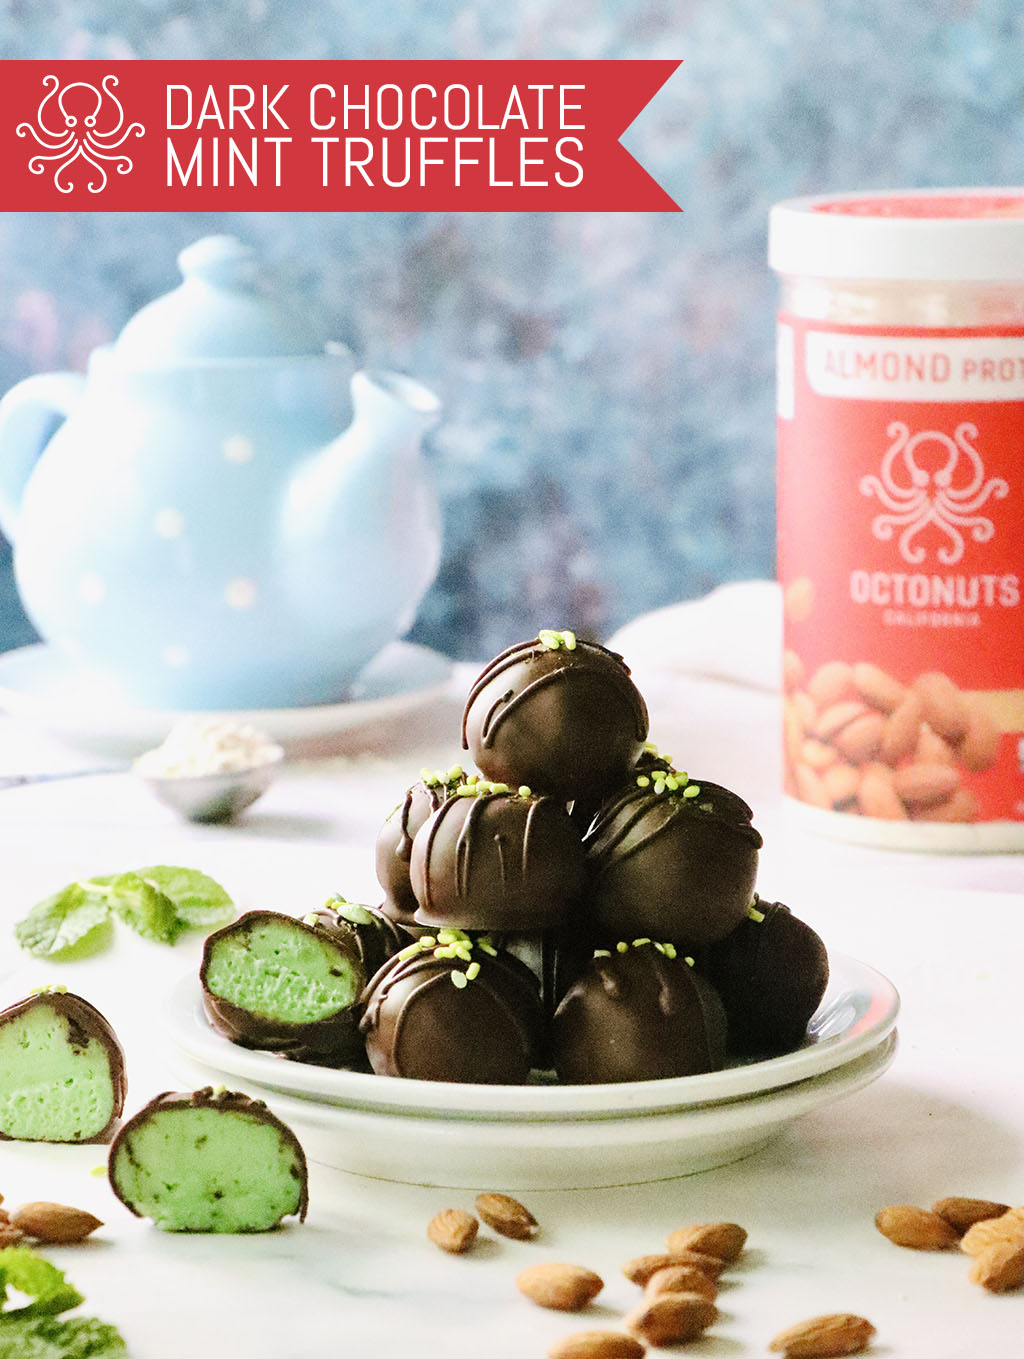 Dark Chocolate Mint Truffles with Octonuts Almond Protein Powder